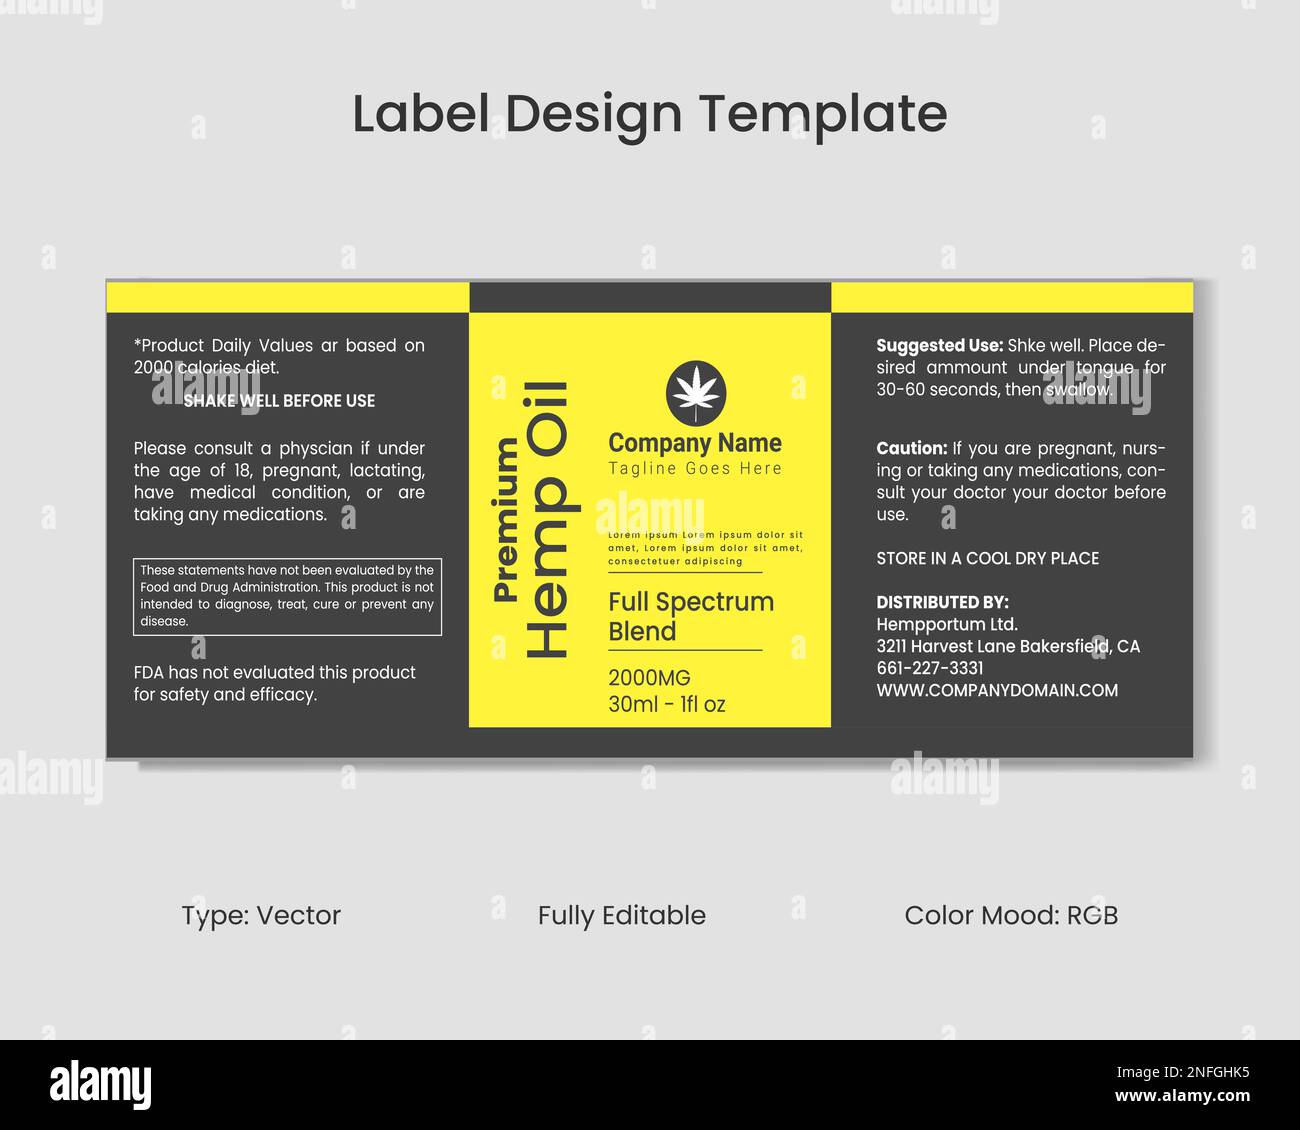 CBD Label Design Template, CBD Dropper Bottle Oil, Hemp Oil Label Template, Product Packaging Design, Extract From Hemp Stock Vector